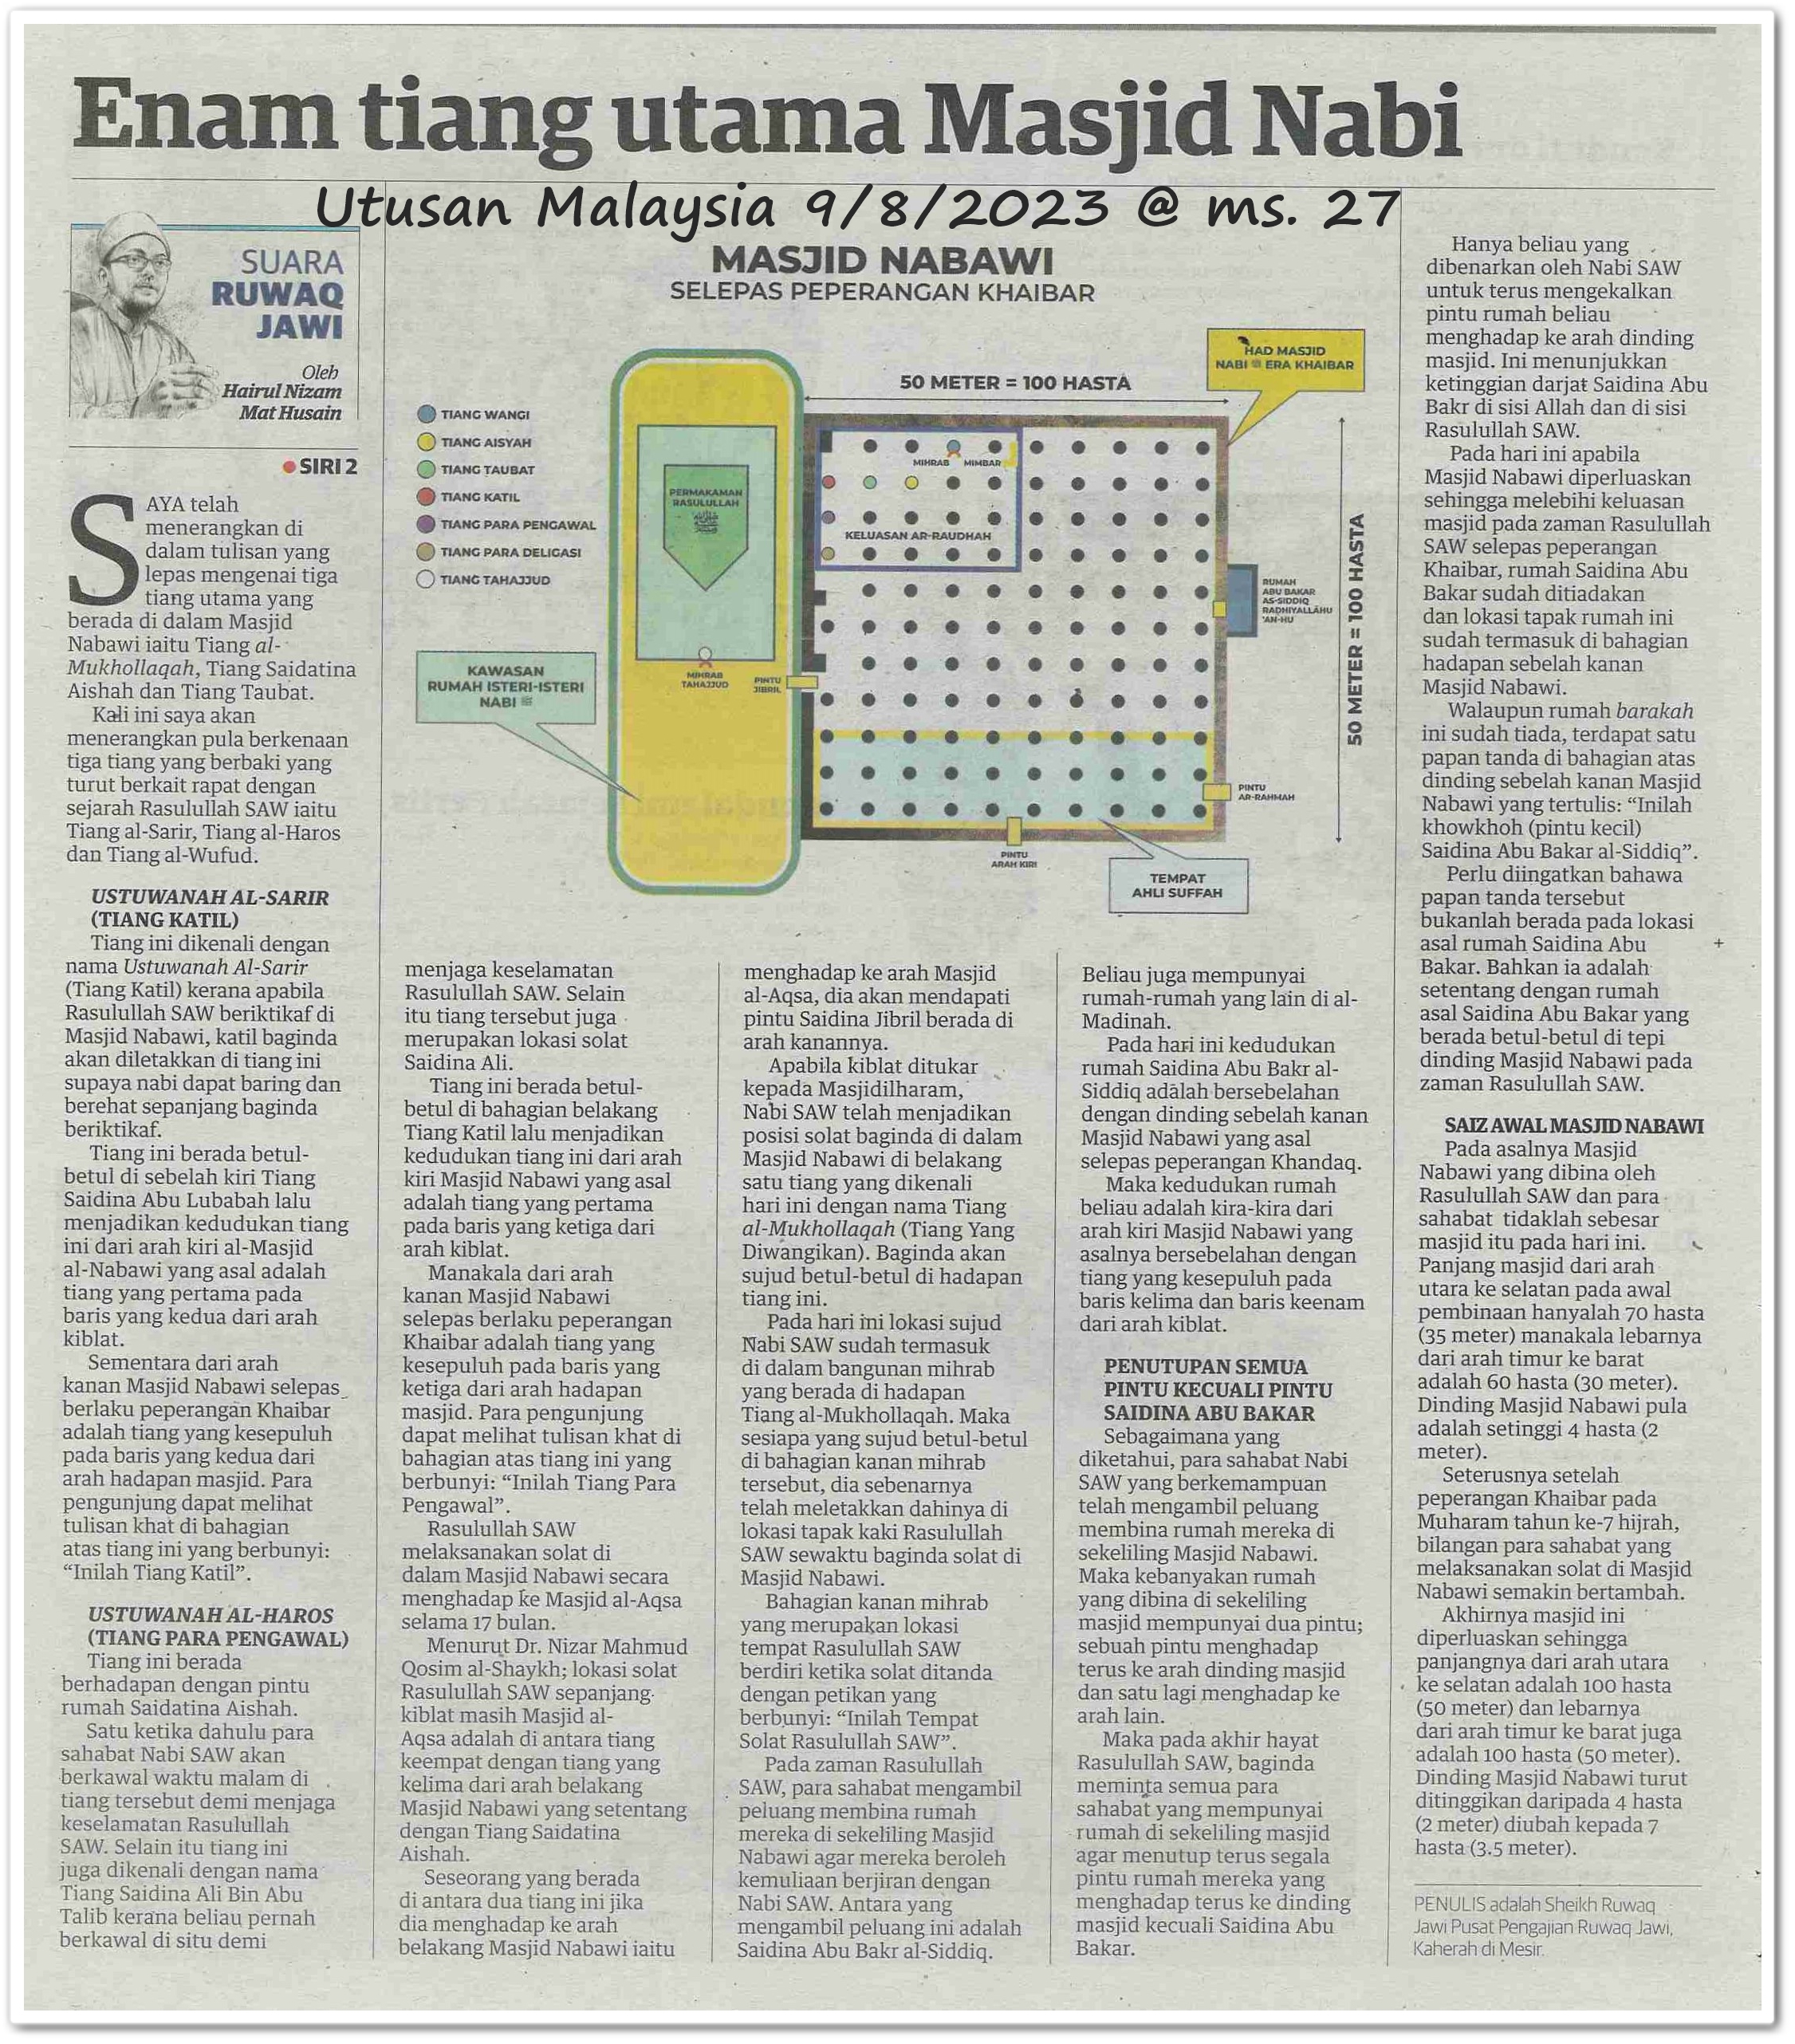 Enam tiang utama Masjid Nabi - Keratan akhbar Utusan Malaysia 9 Ogos 2023